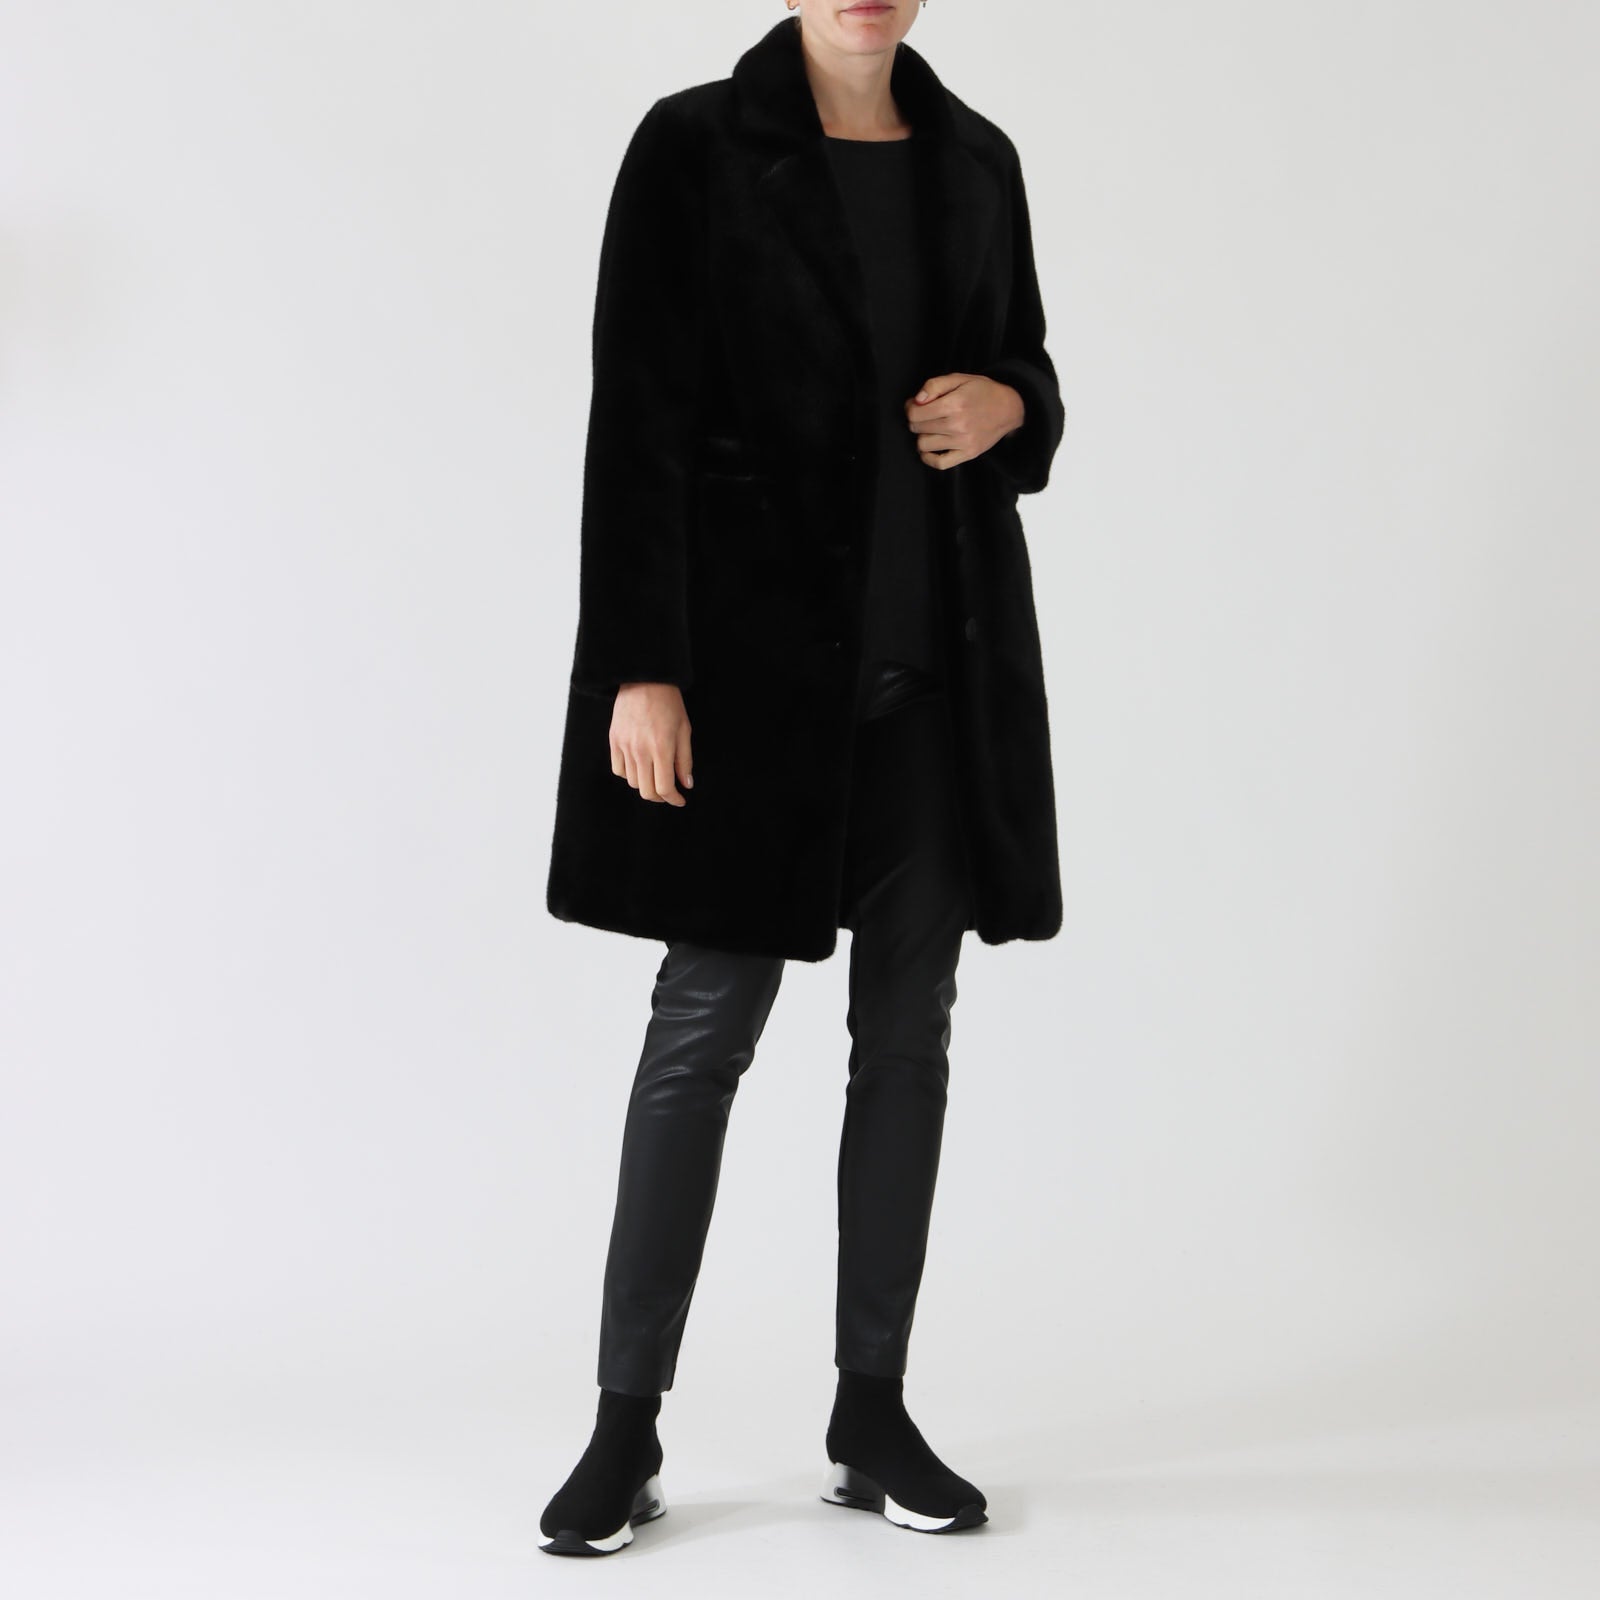 Mayla Black Faux Fur Coat